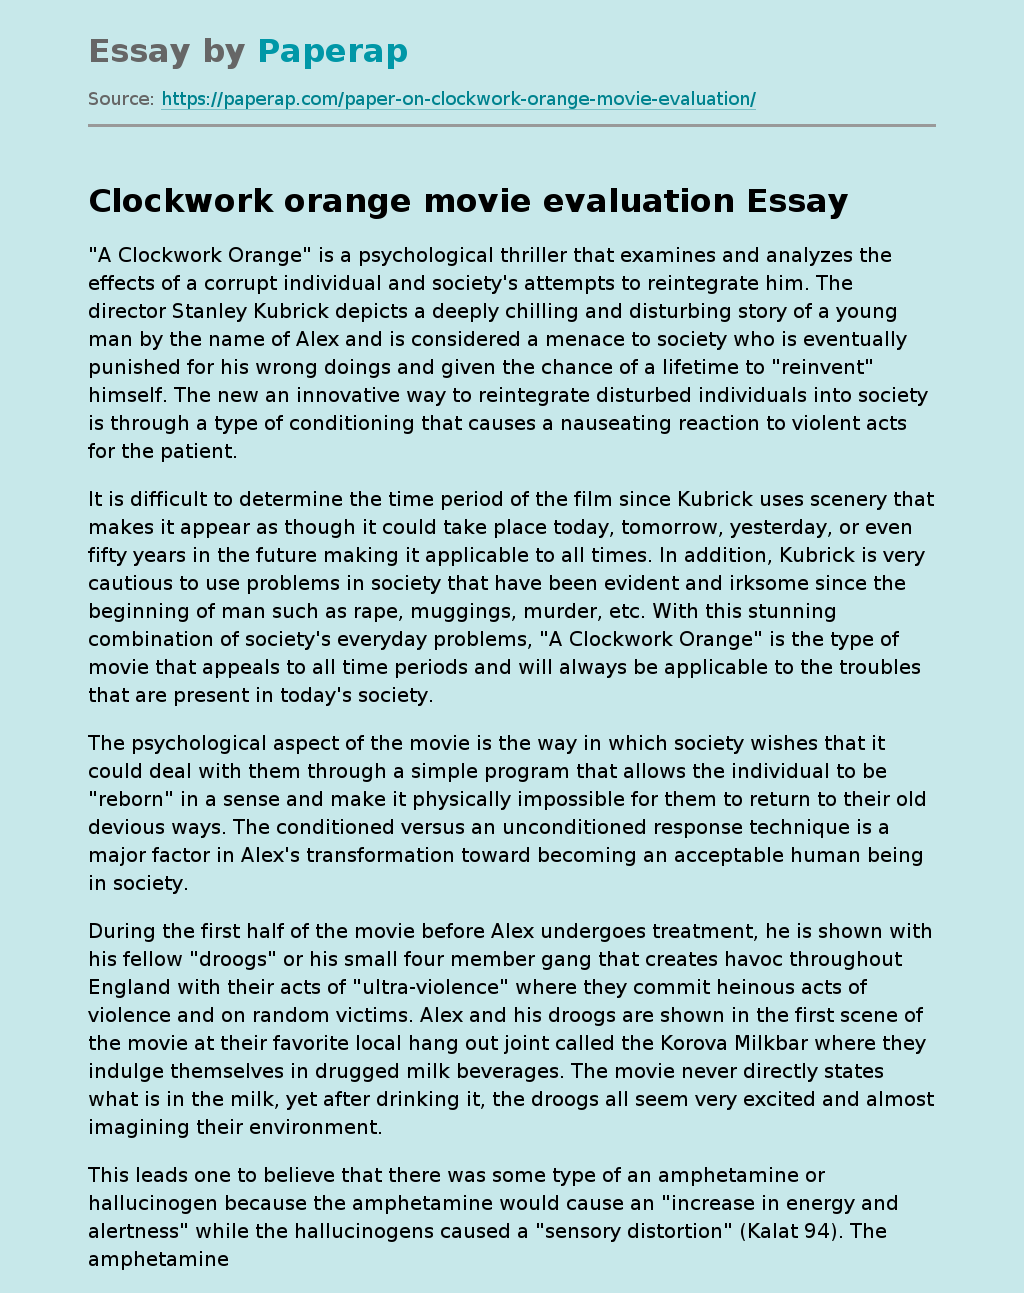 Clockwork orange movie evaluation